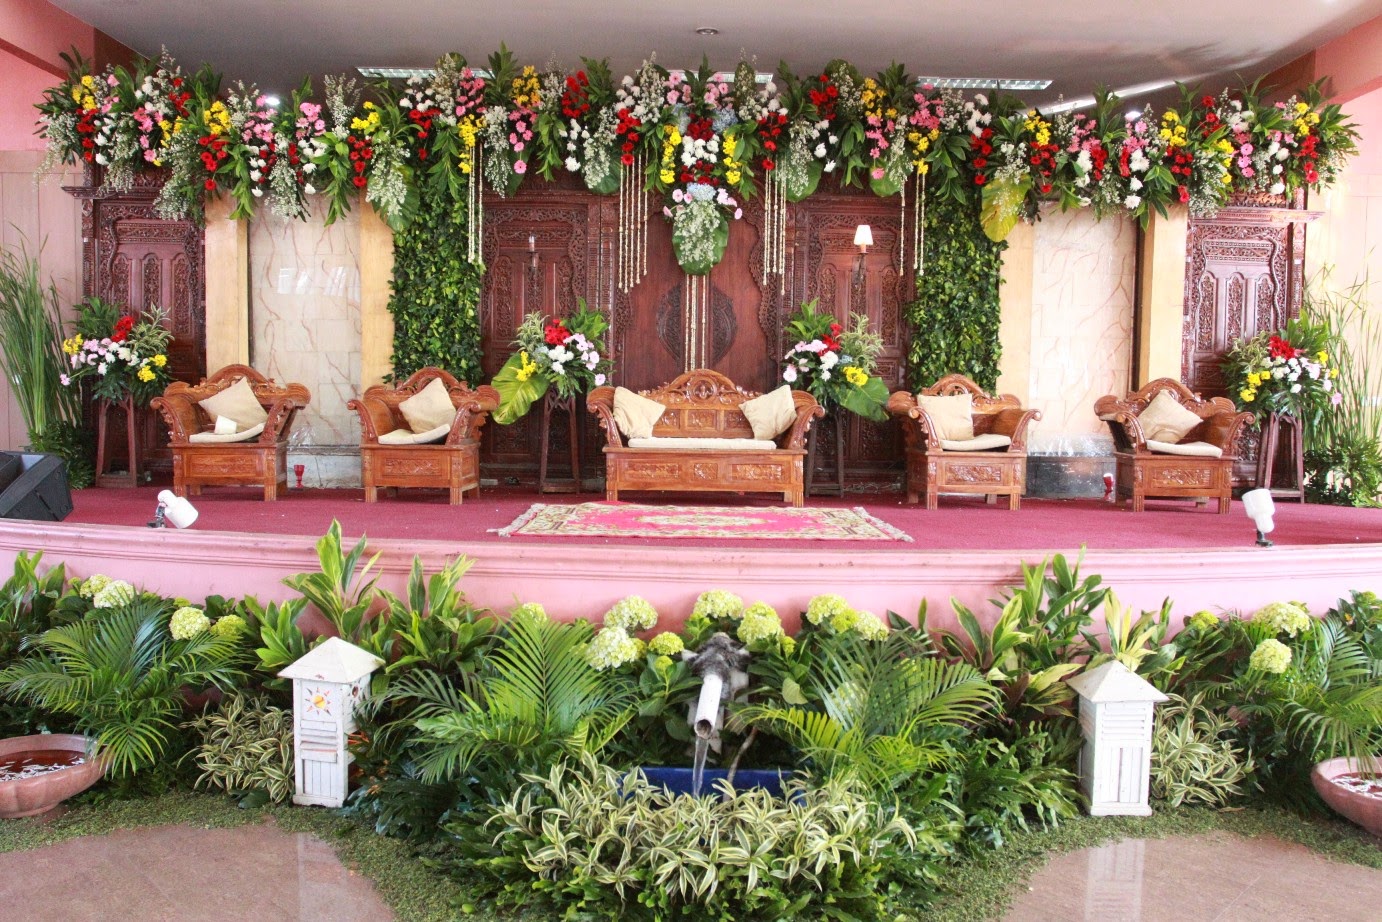  Dekorasi  Pernikahan  Sederhana  Di Rumah Kumpulan Dekorasi  